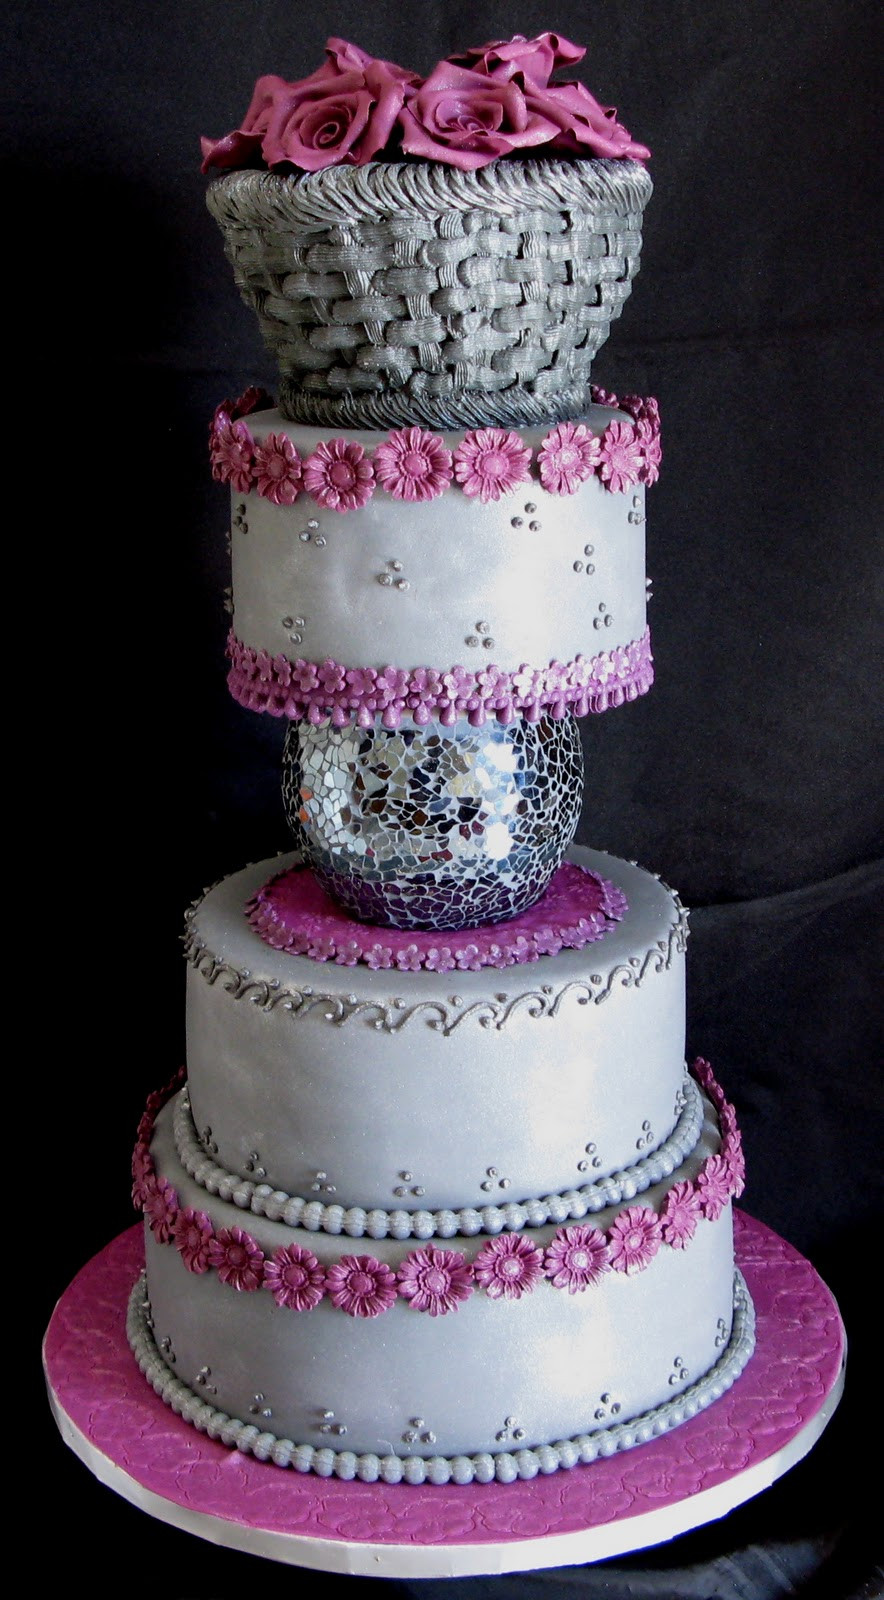 4 Layered Wedding Cakes
 Sugarcraft by Soni Four Layer Wedding Cake Basket of